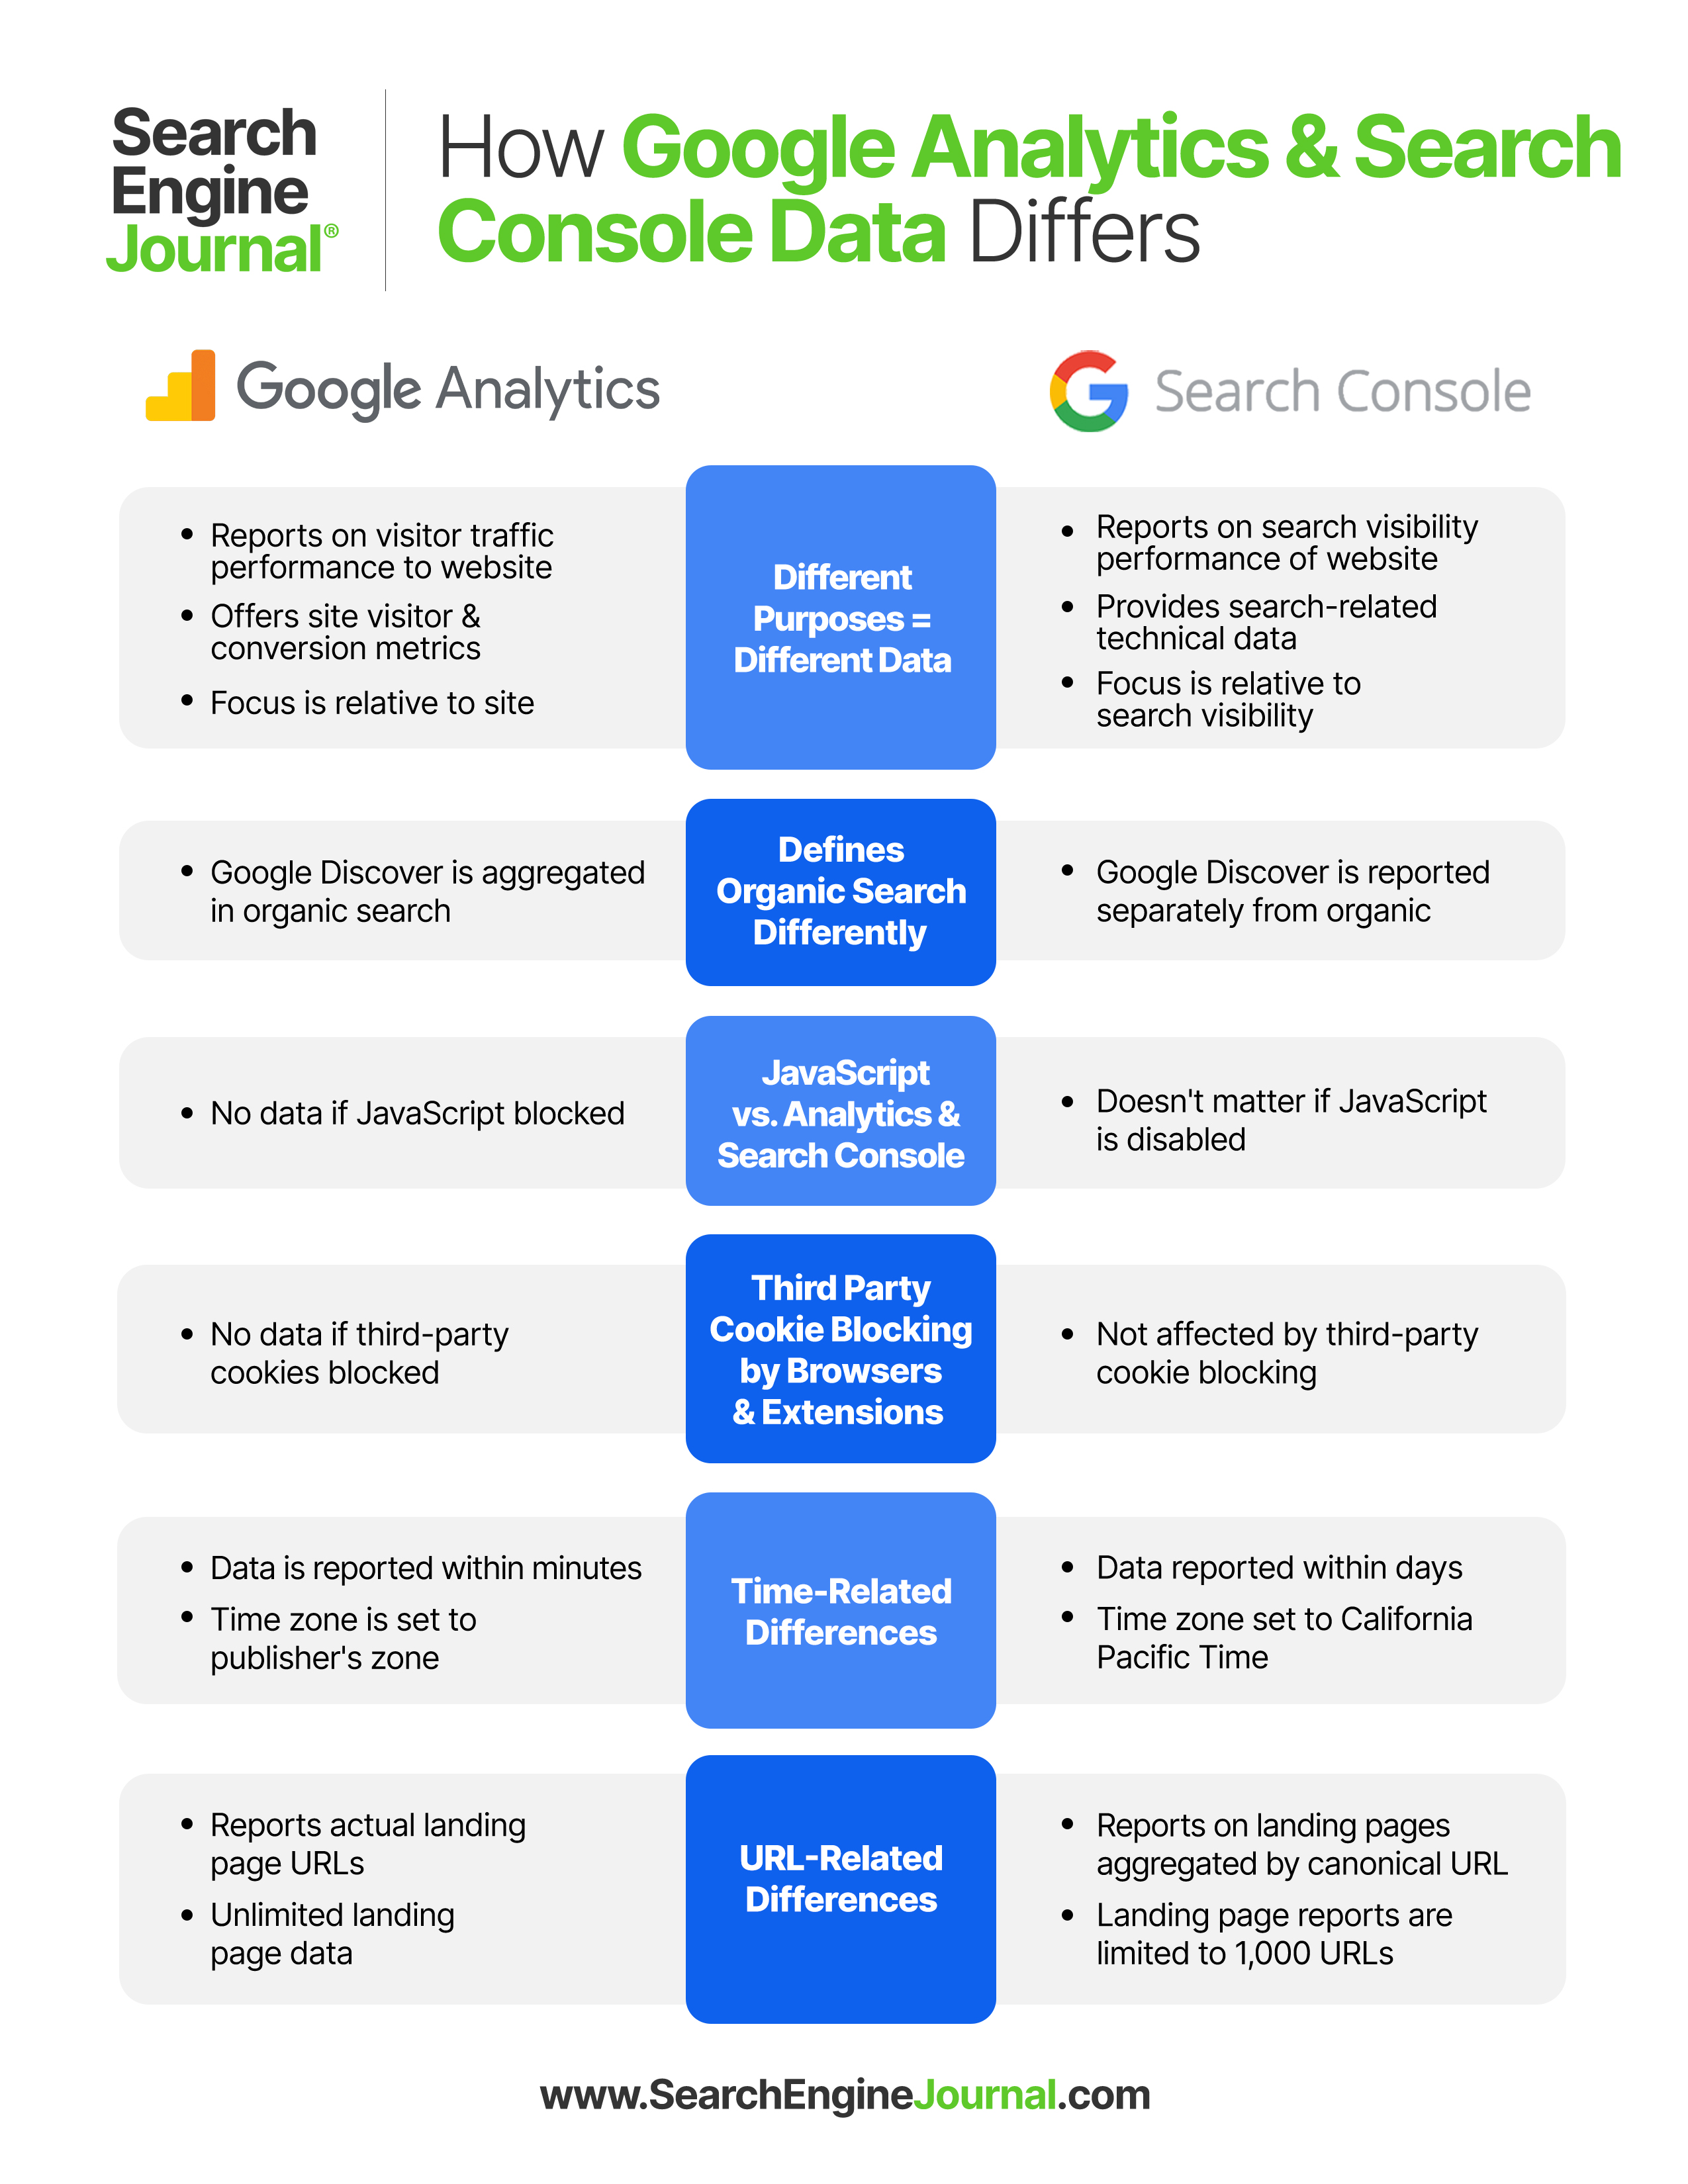 Google Analytics vs Google Search Console